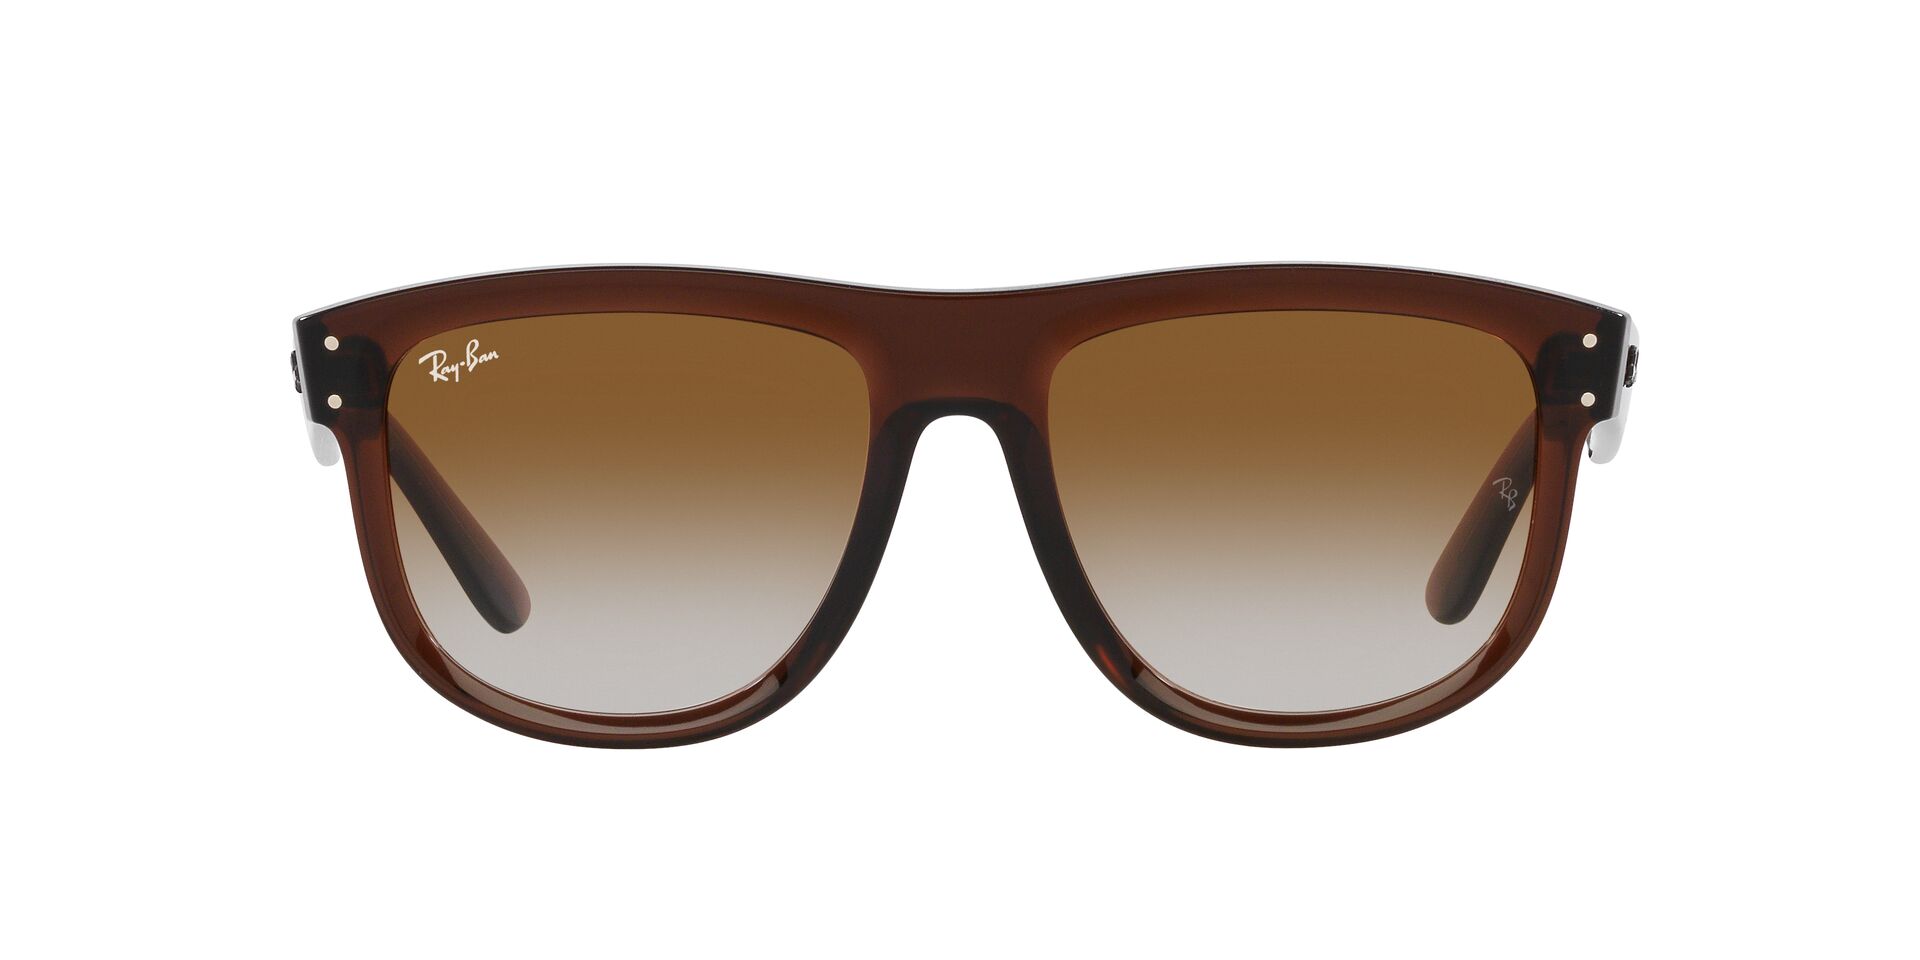 Buy Ray-Ban Aviator Full Color Legend Sunglasses Online.